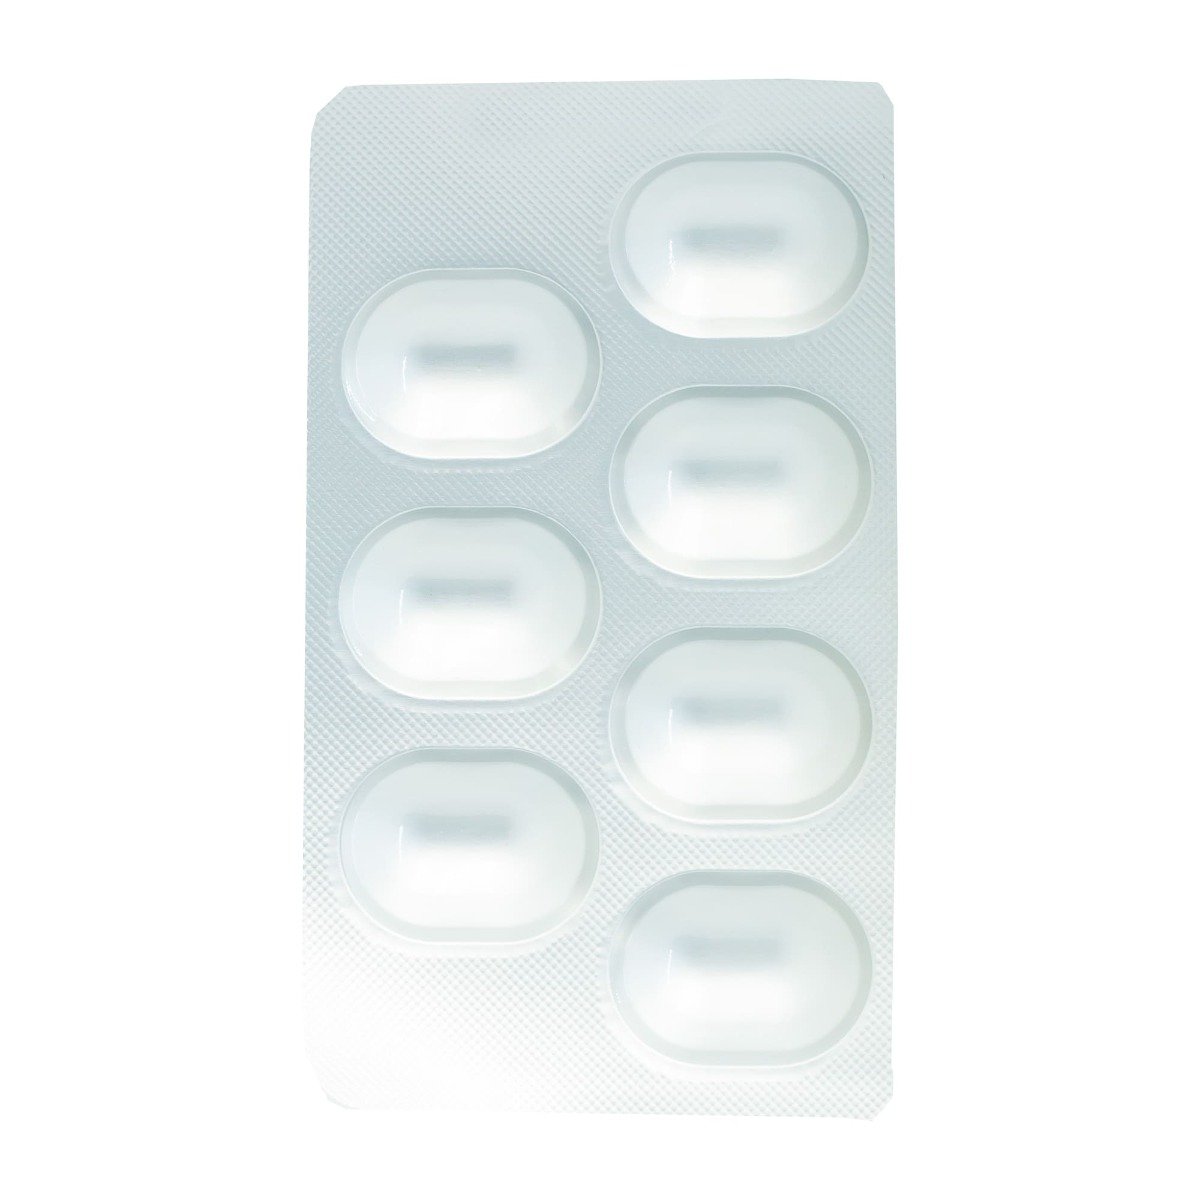 Lipitor 10 mg - 28 Tablets - Bloom Pharmacy